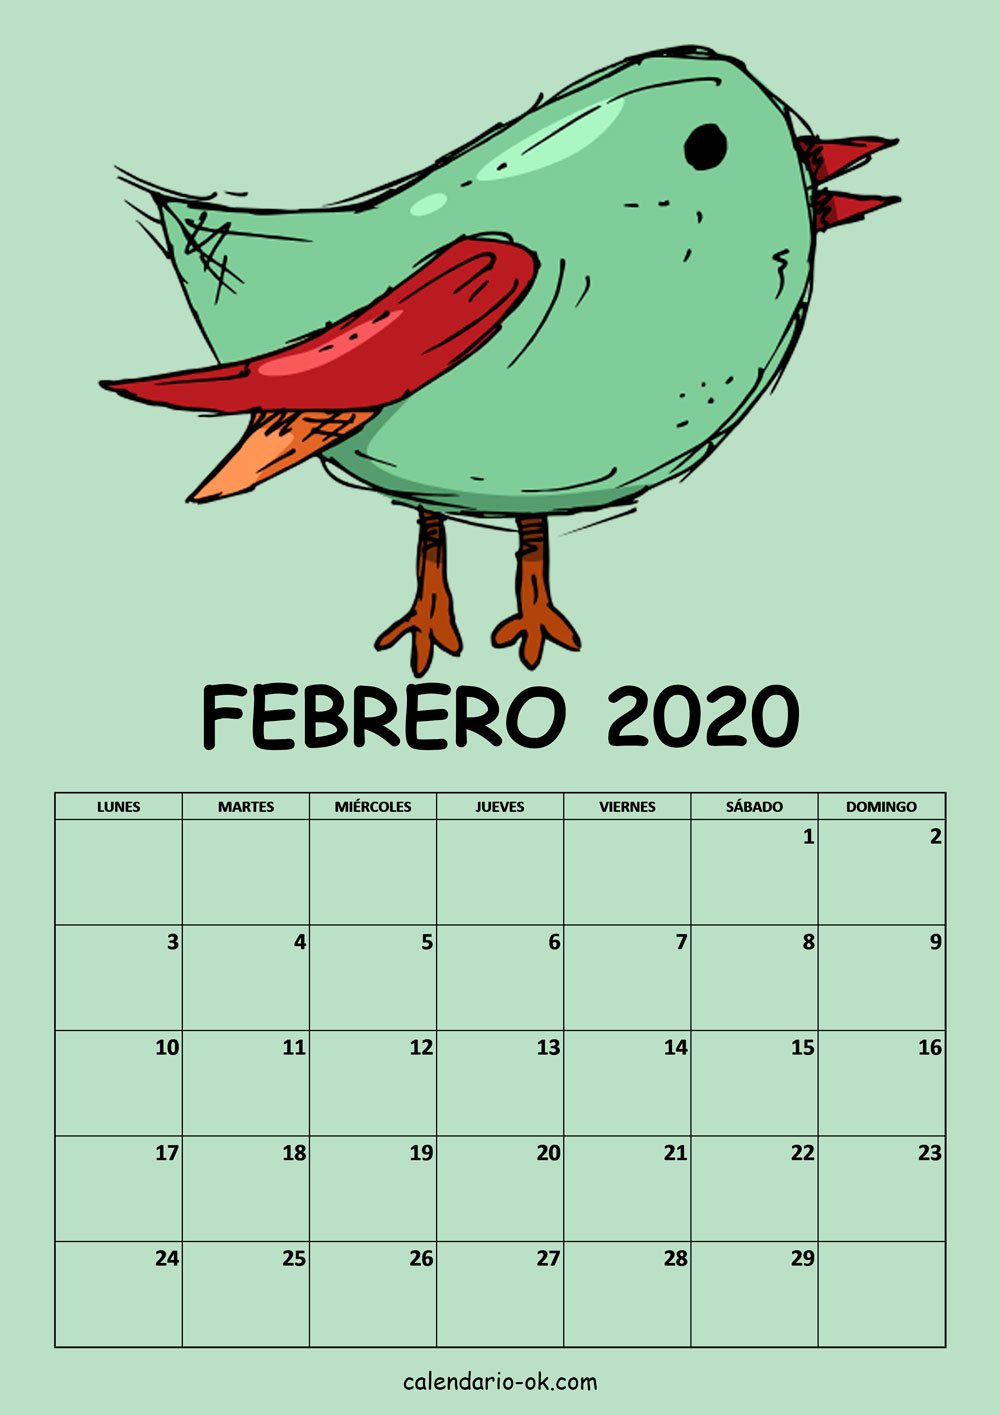 Calendario FEBRERO 2020 DIBUJO PAJAROS